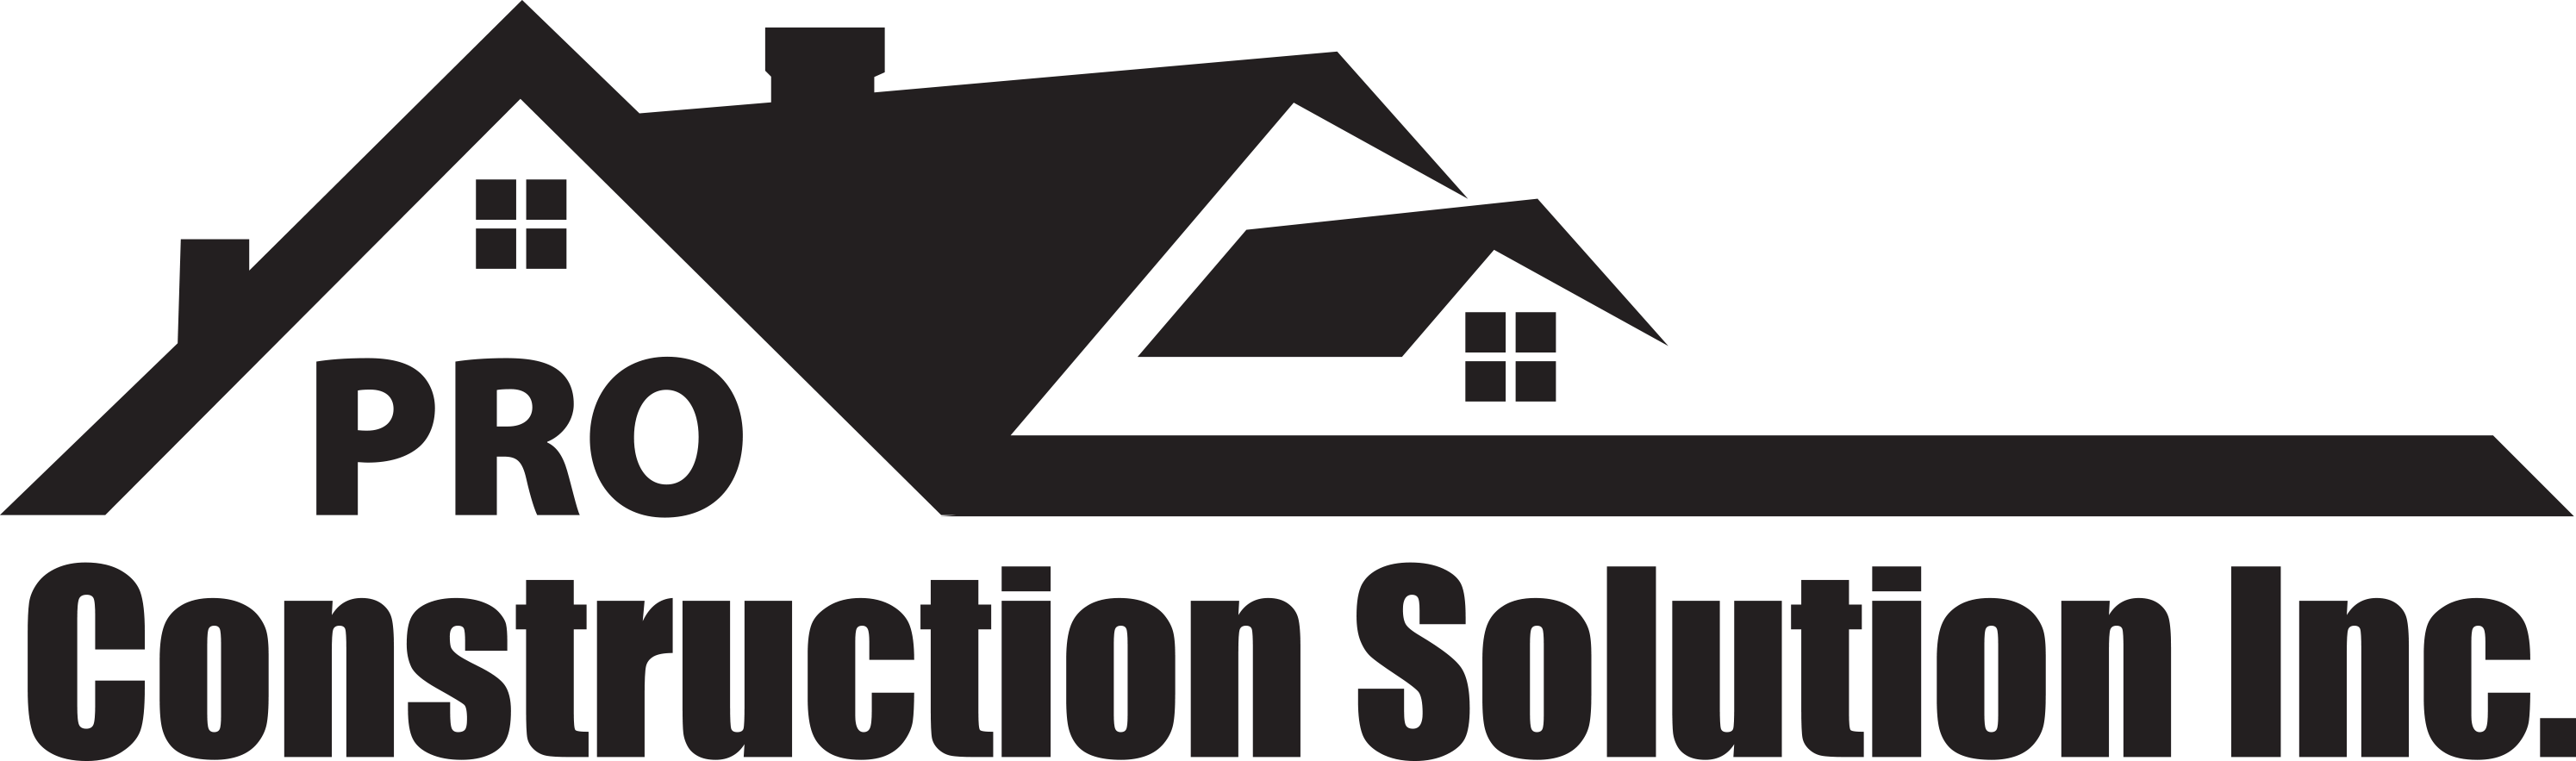 Home Construction Company Logo - PCS | Professional Construction Solution